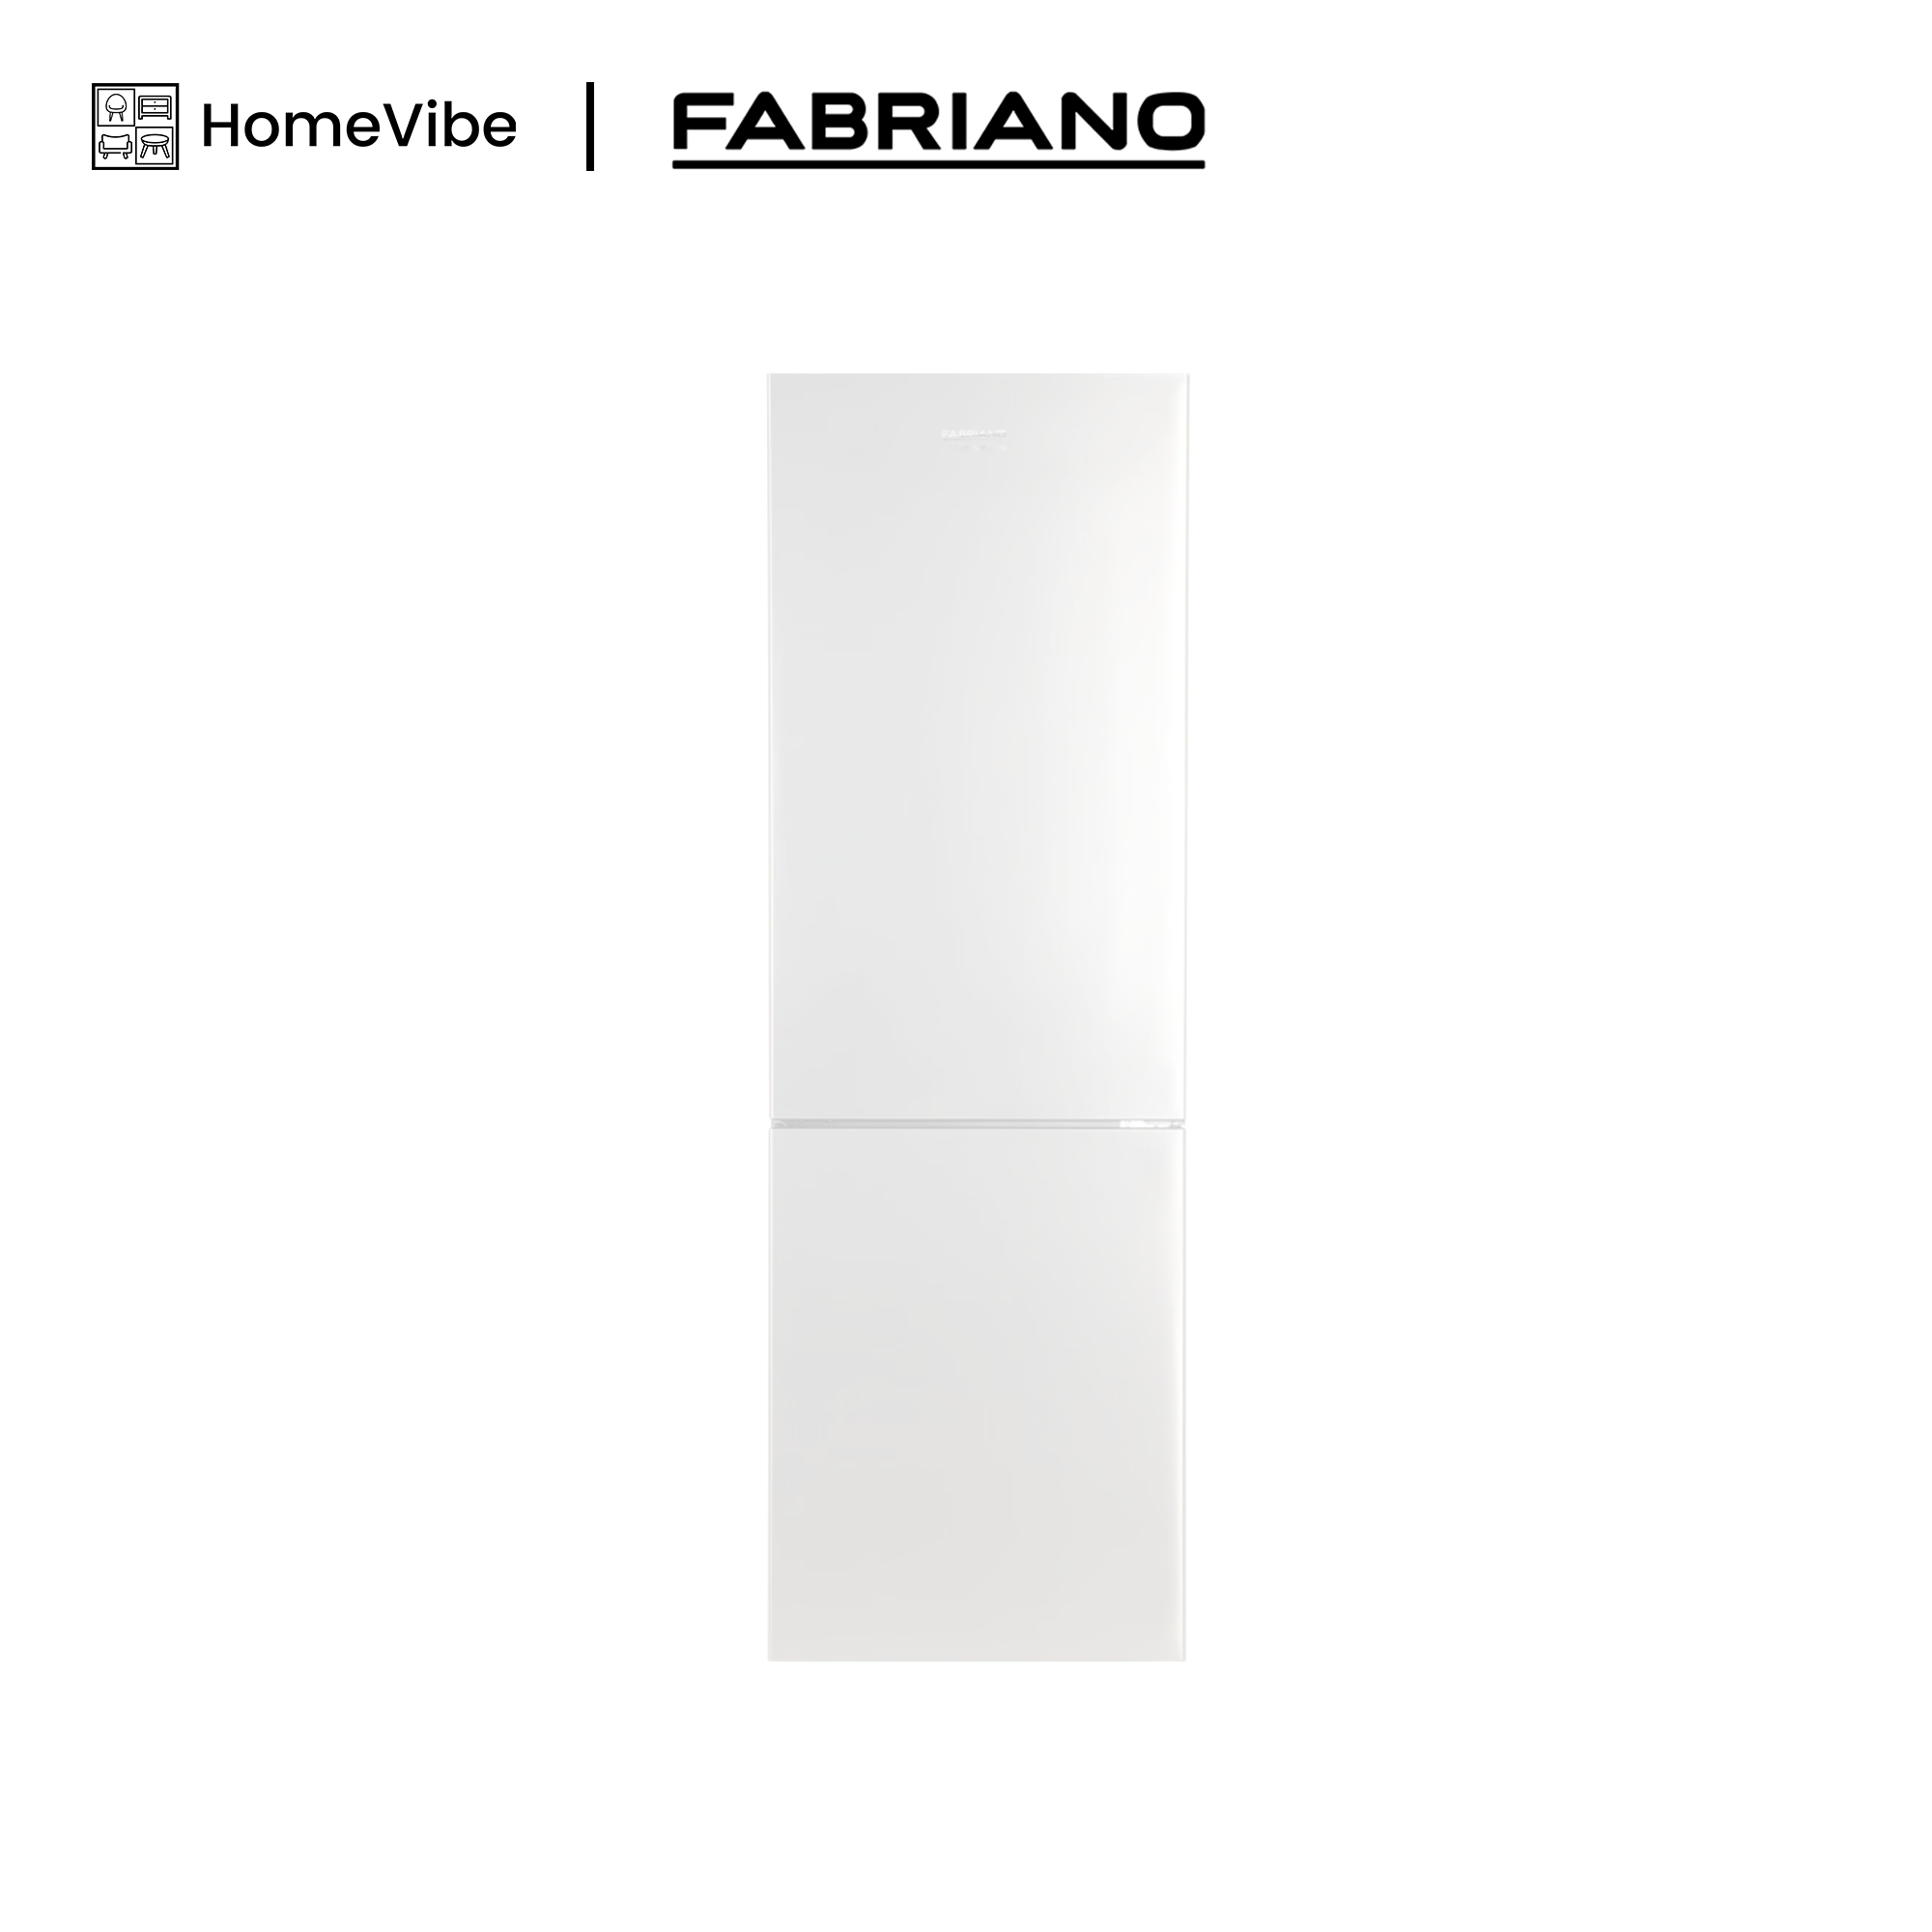 Fabriano 12 cuft Bottom Refrigerator FBFG12SL-I